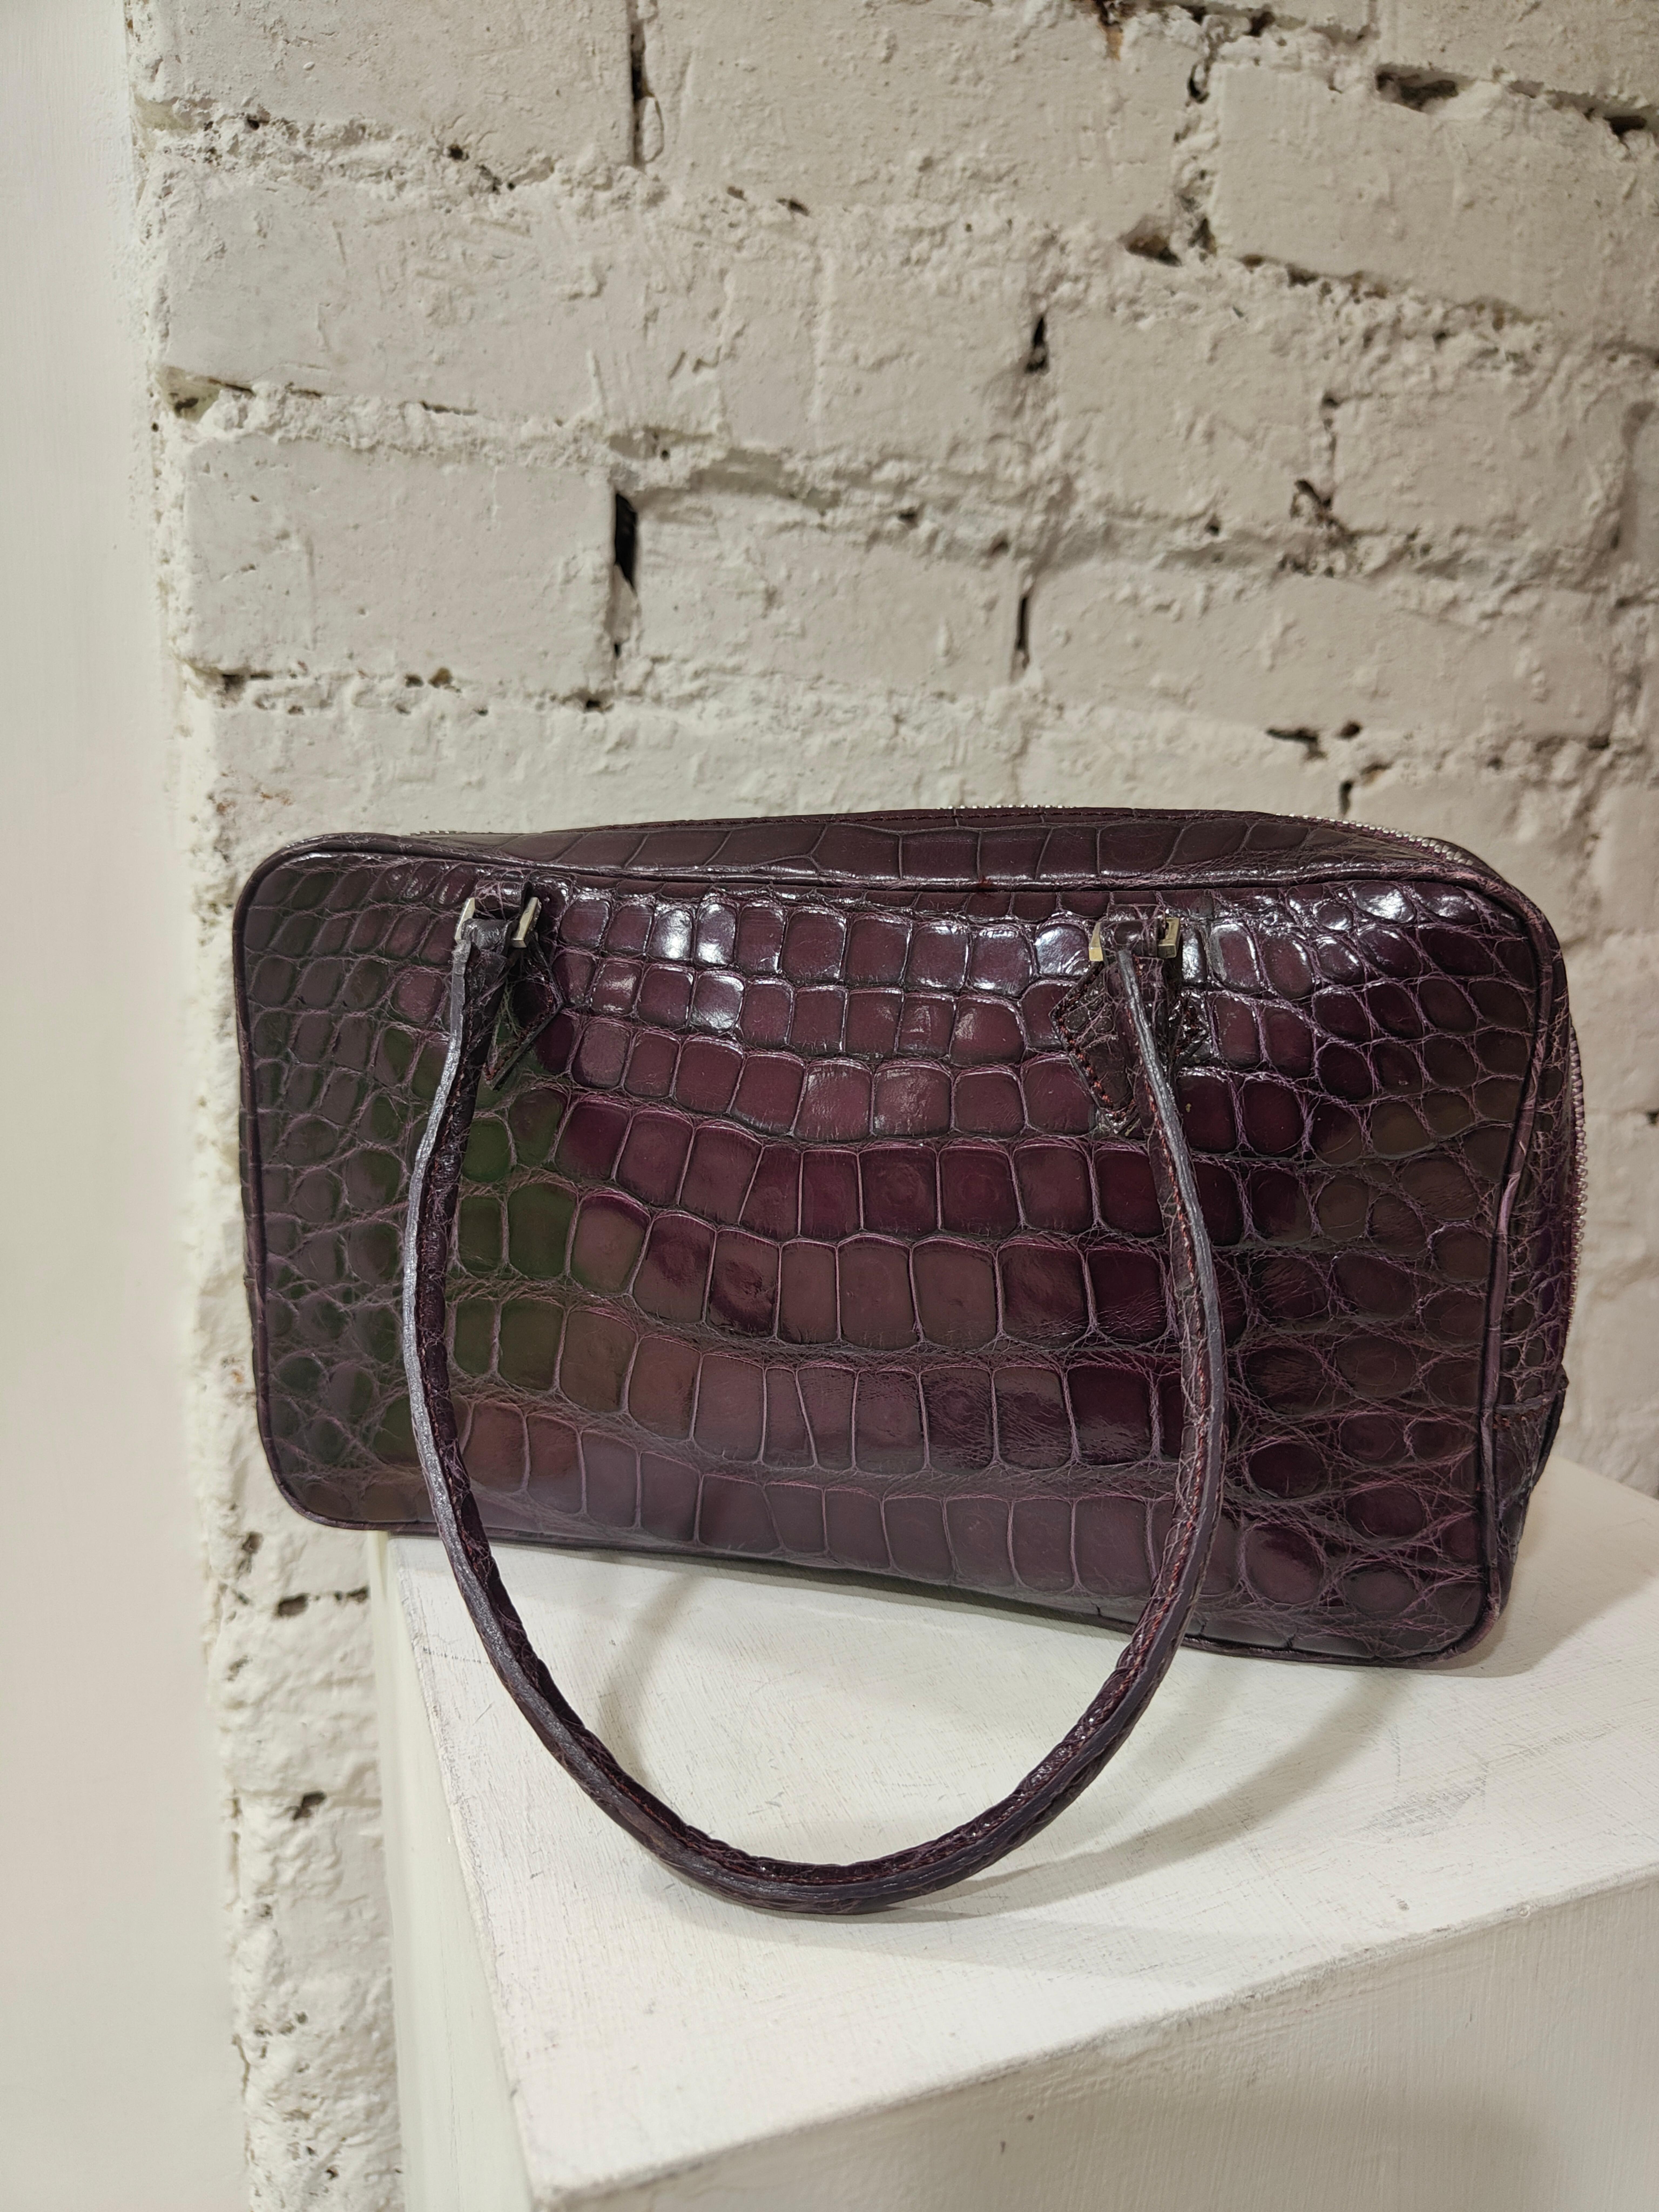 Sirni purple crocodile handbag - shoulder bag In Excellent Condition For Sale In Capri, IT